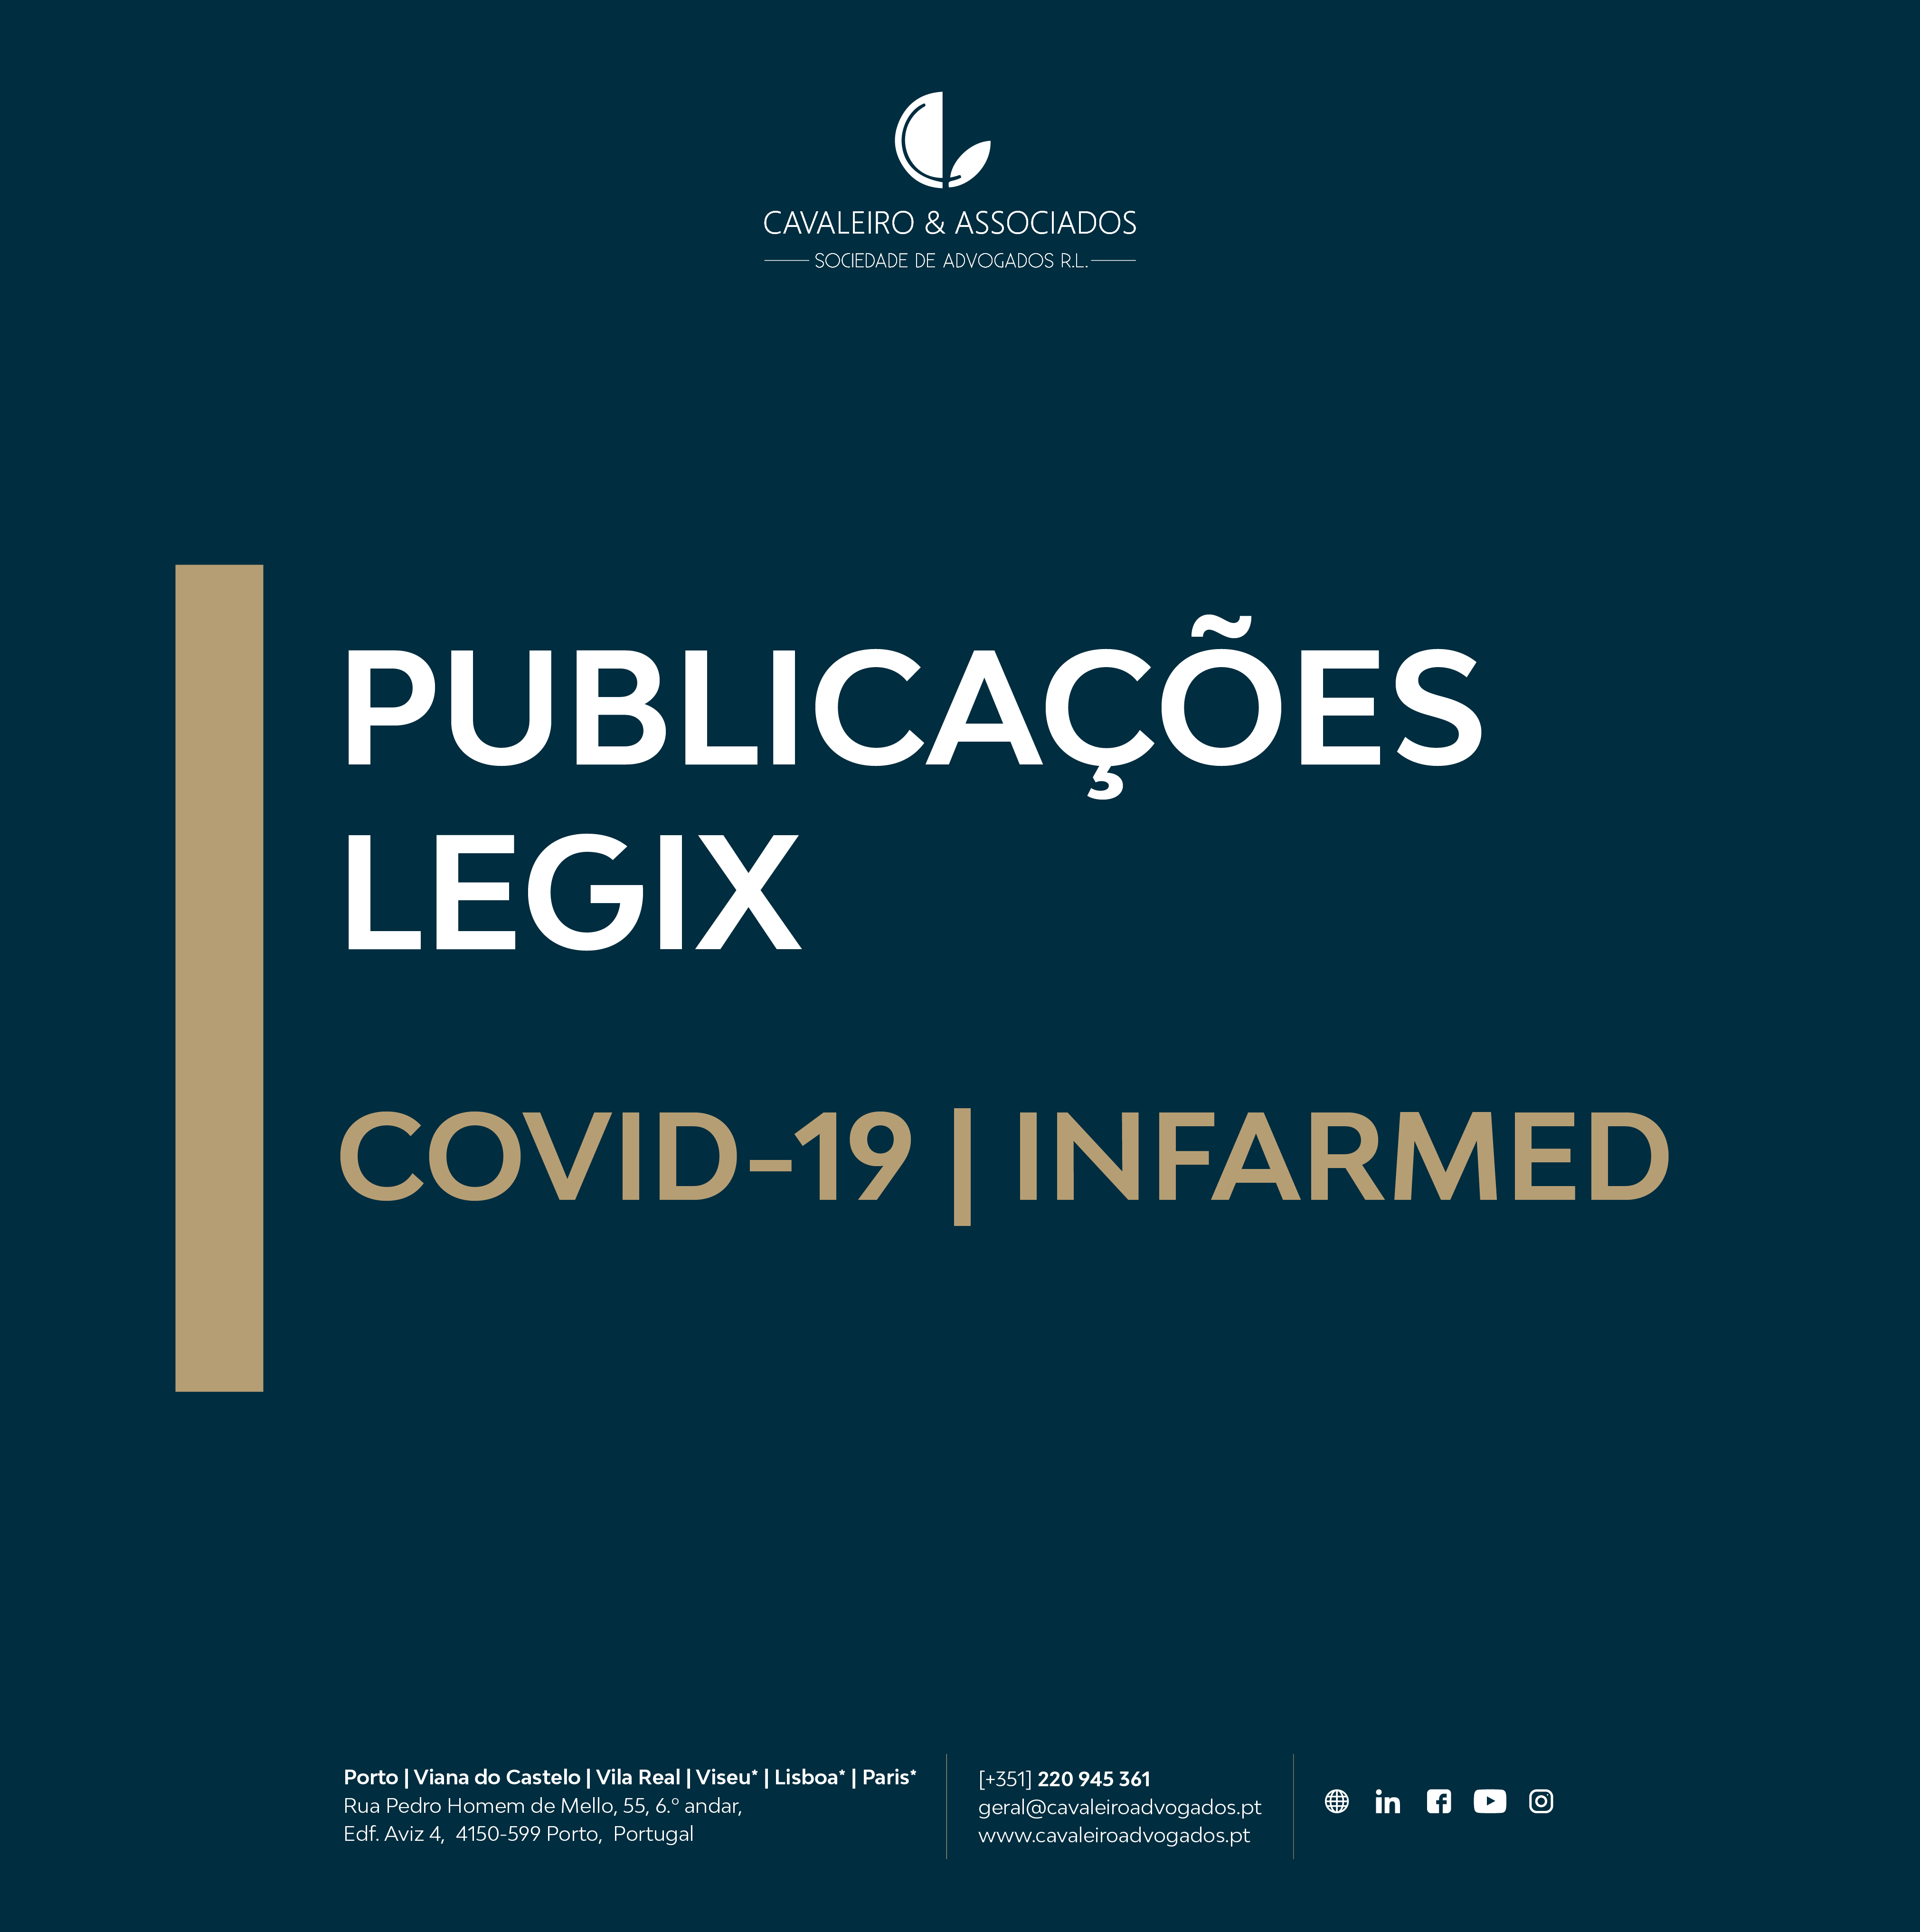 PUBLICAÇÕES LEGIX – COVID-19 | INFARMED